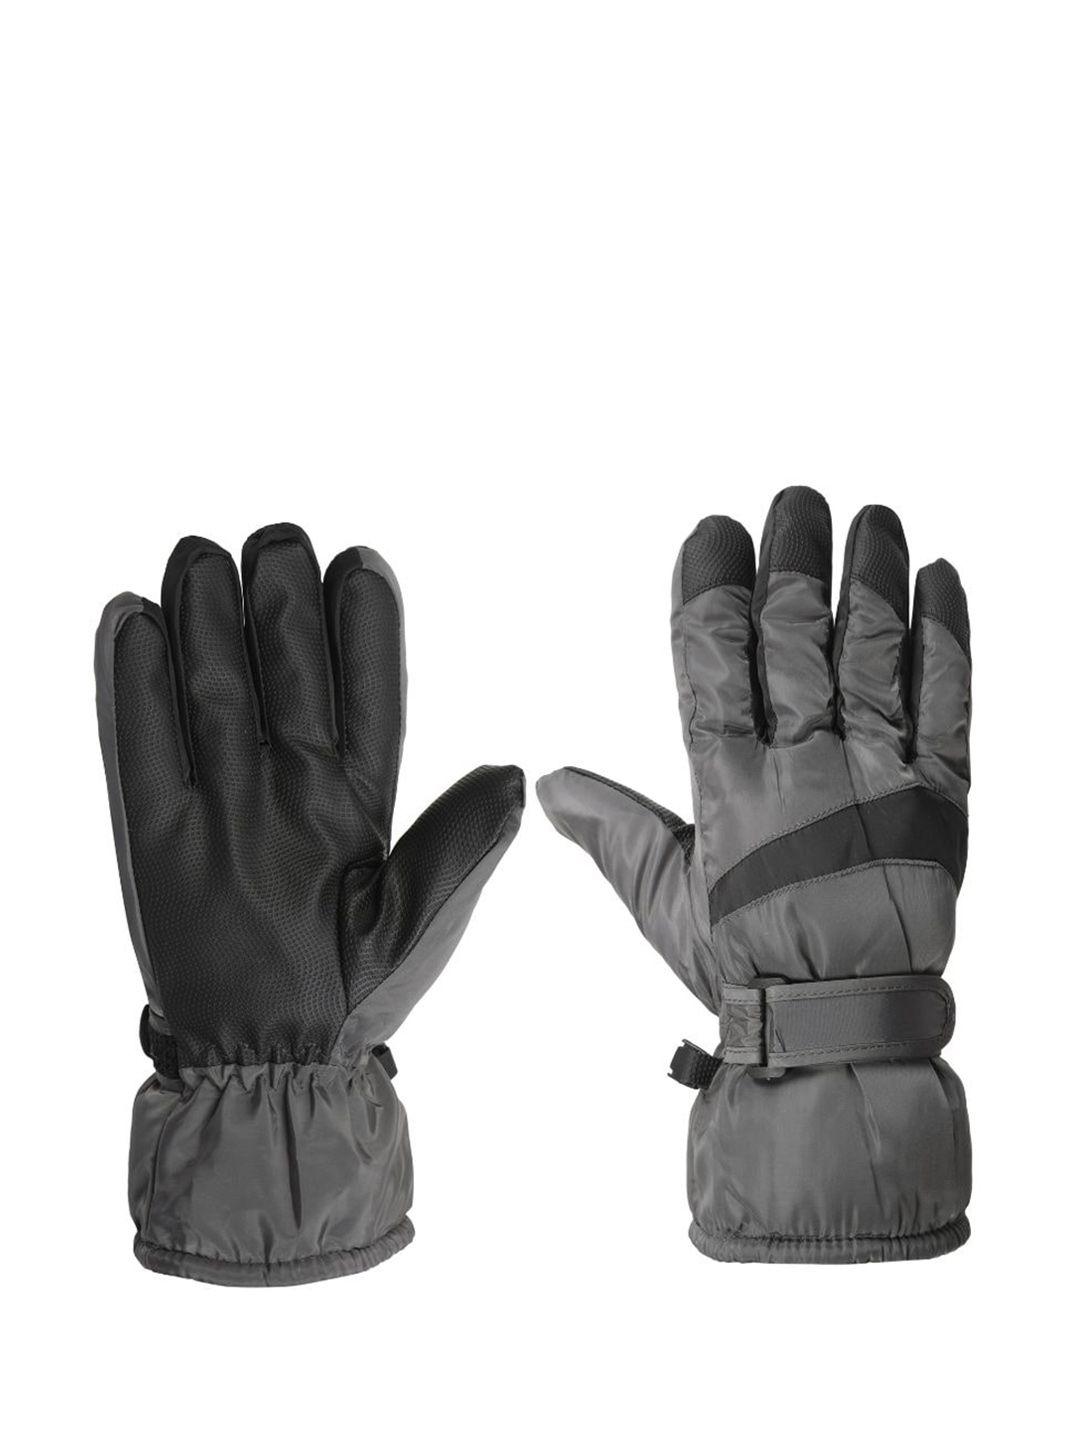 fabseasons water resistant windproof winter sports gloves